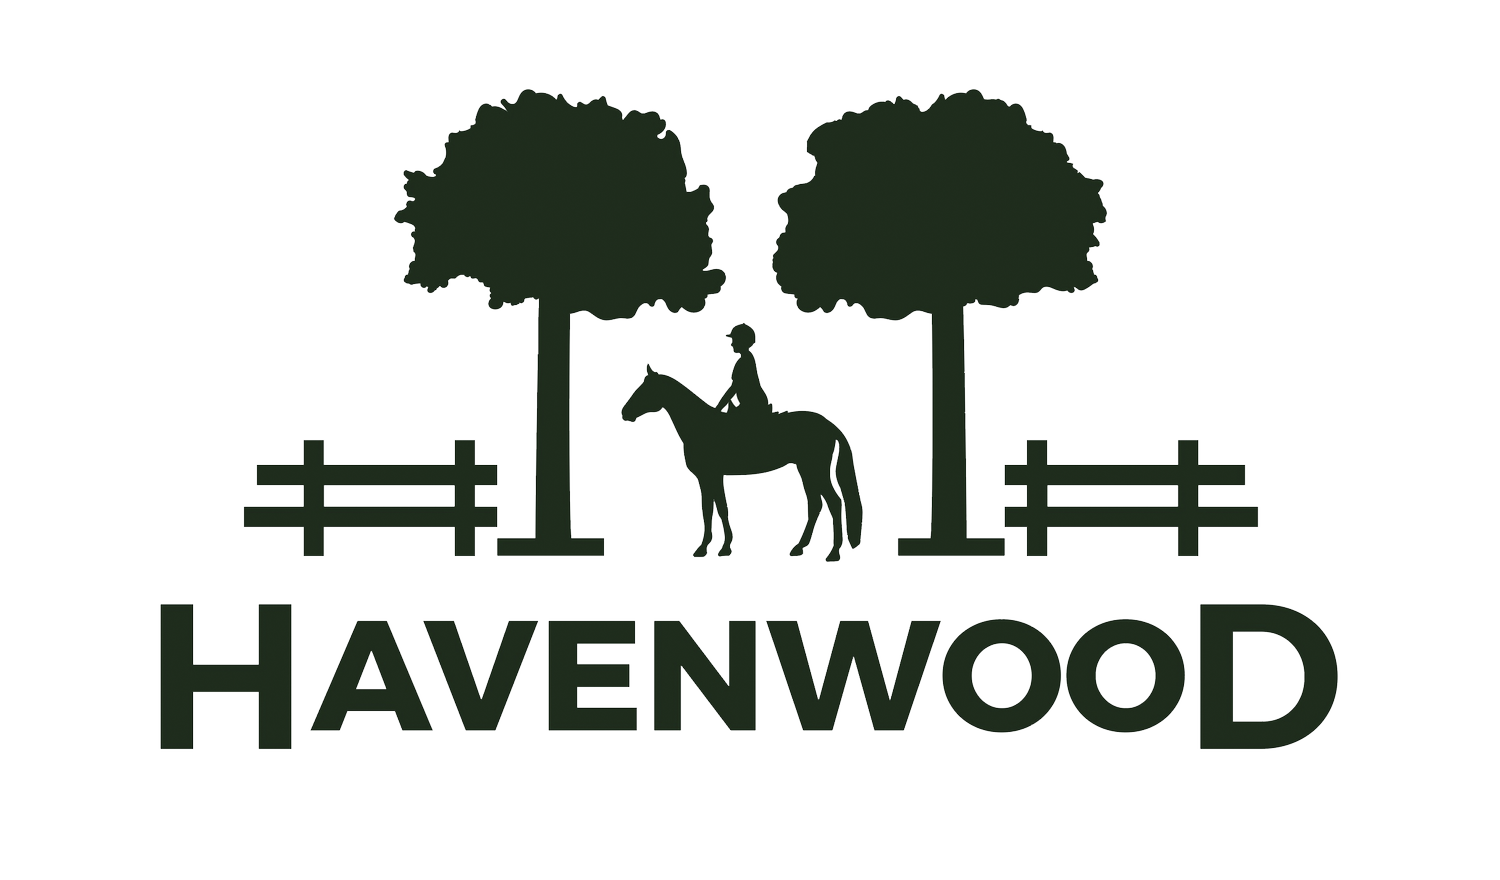 Havenwood Equestrian Center